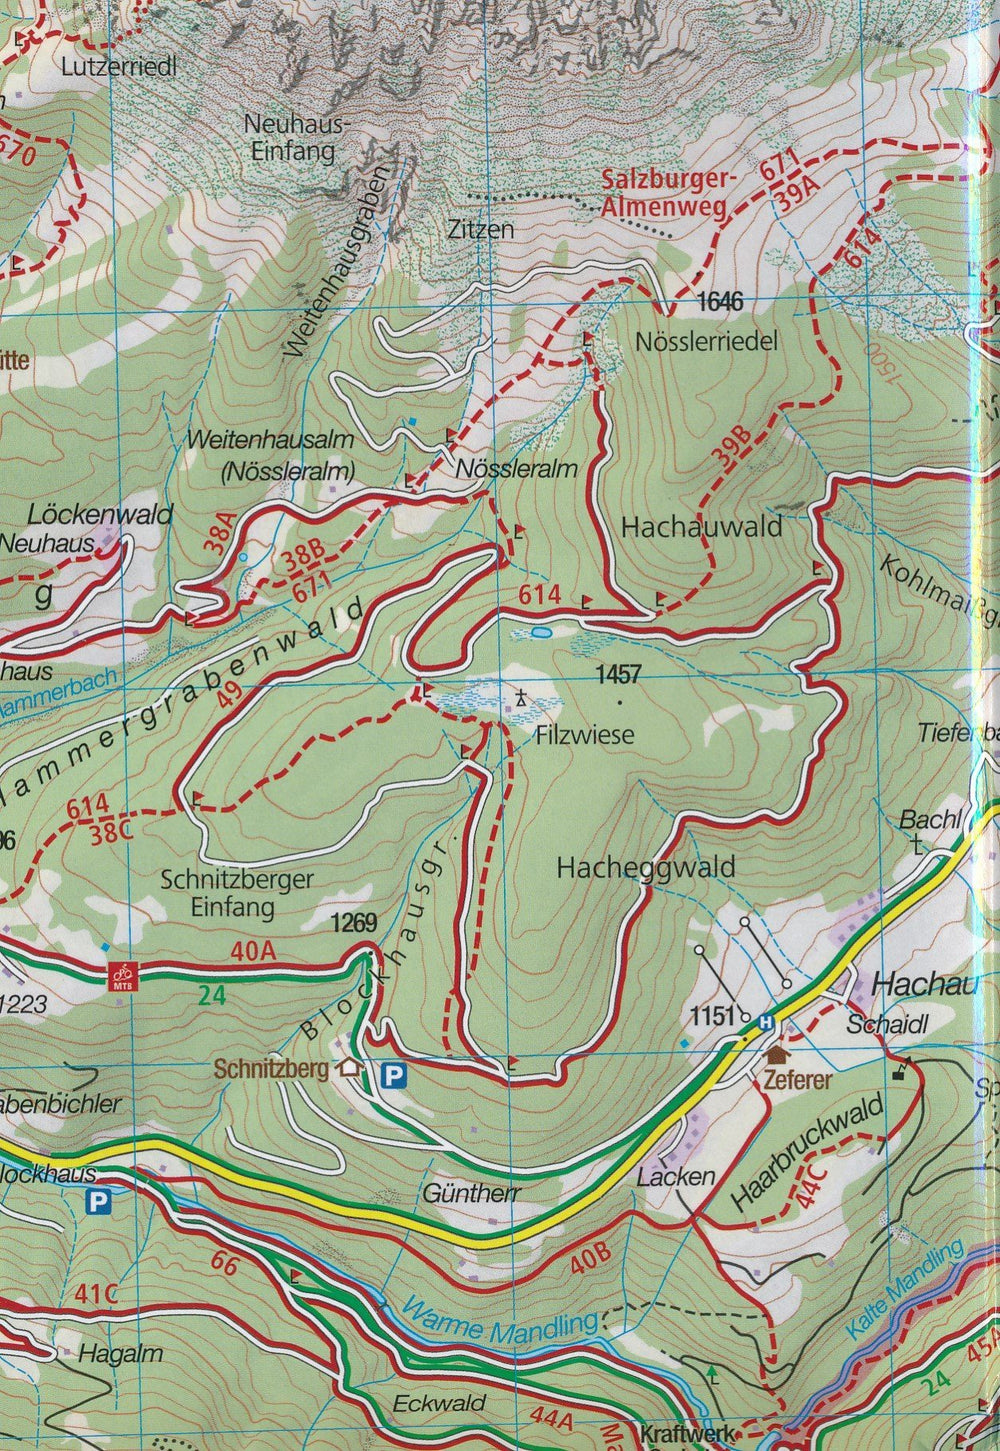 Carte de randonnée n° 067 - Seiser Alm, Alpe di Siusi + Aktiv Guid (Sud Tyrol) | Kompass carte pliée Kompass 